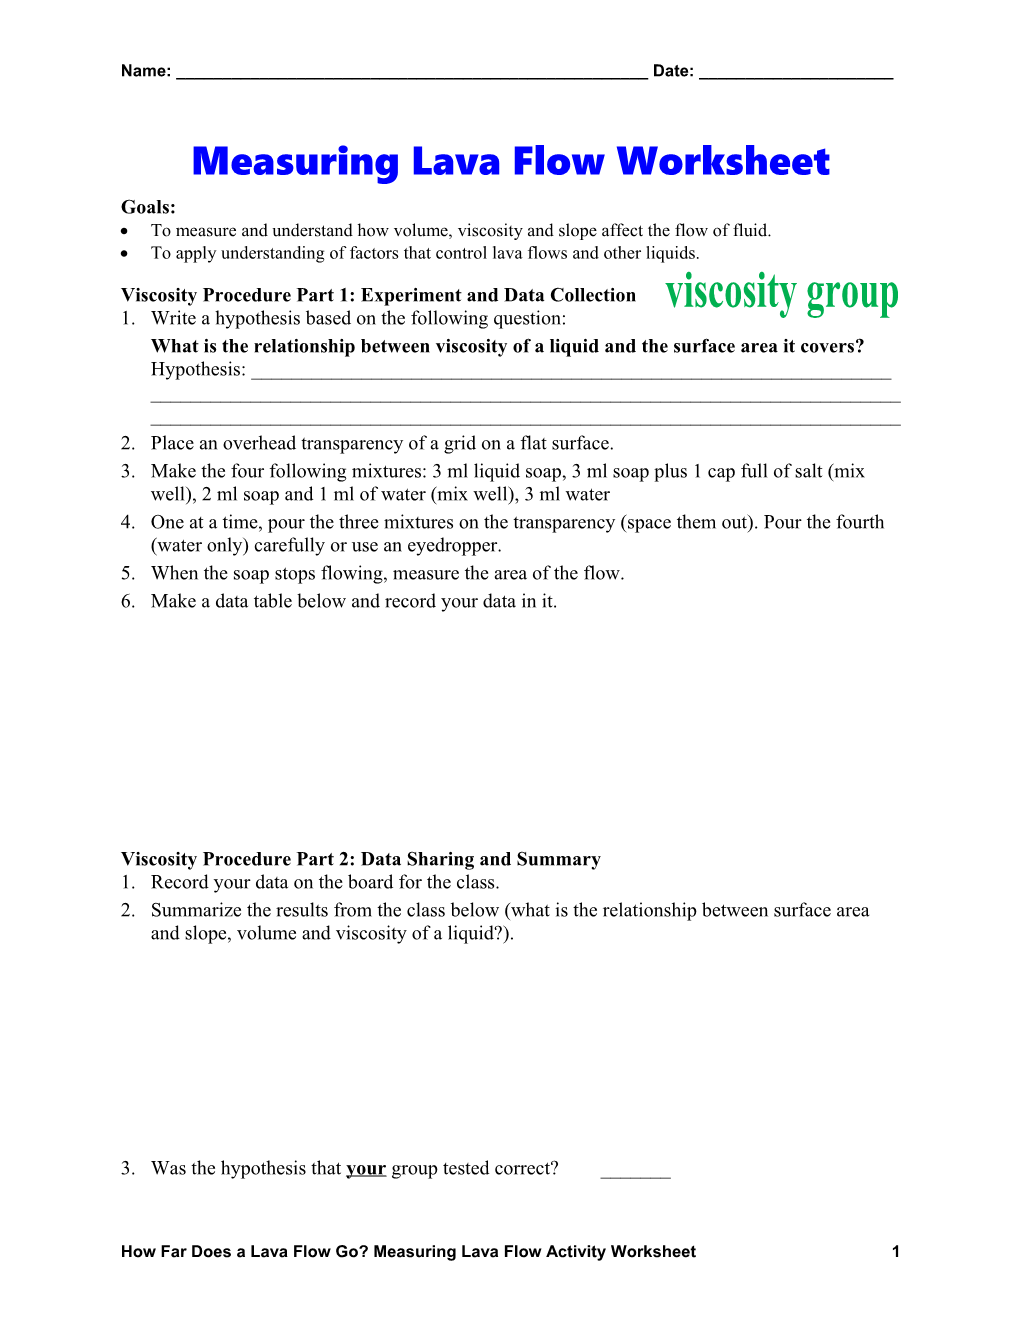 Measuring Lava Flow Worksheet